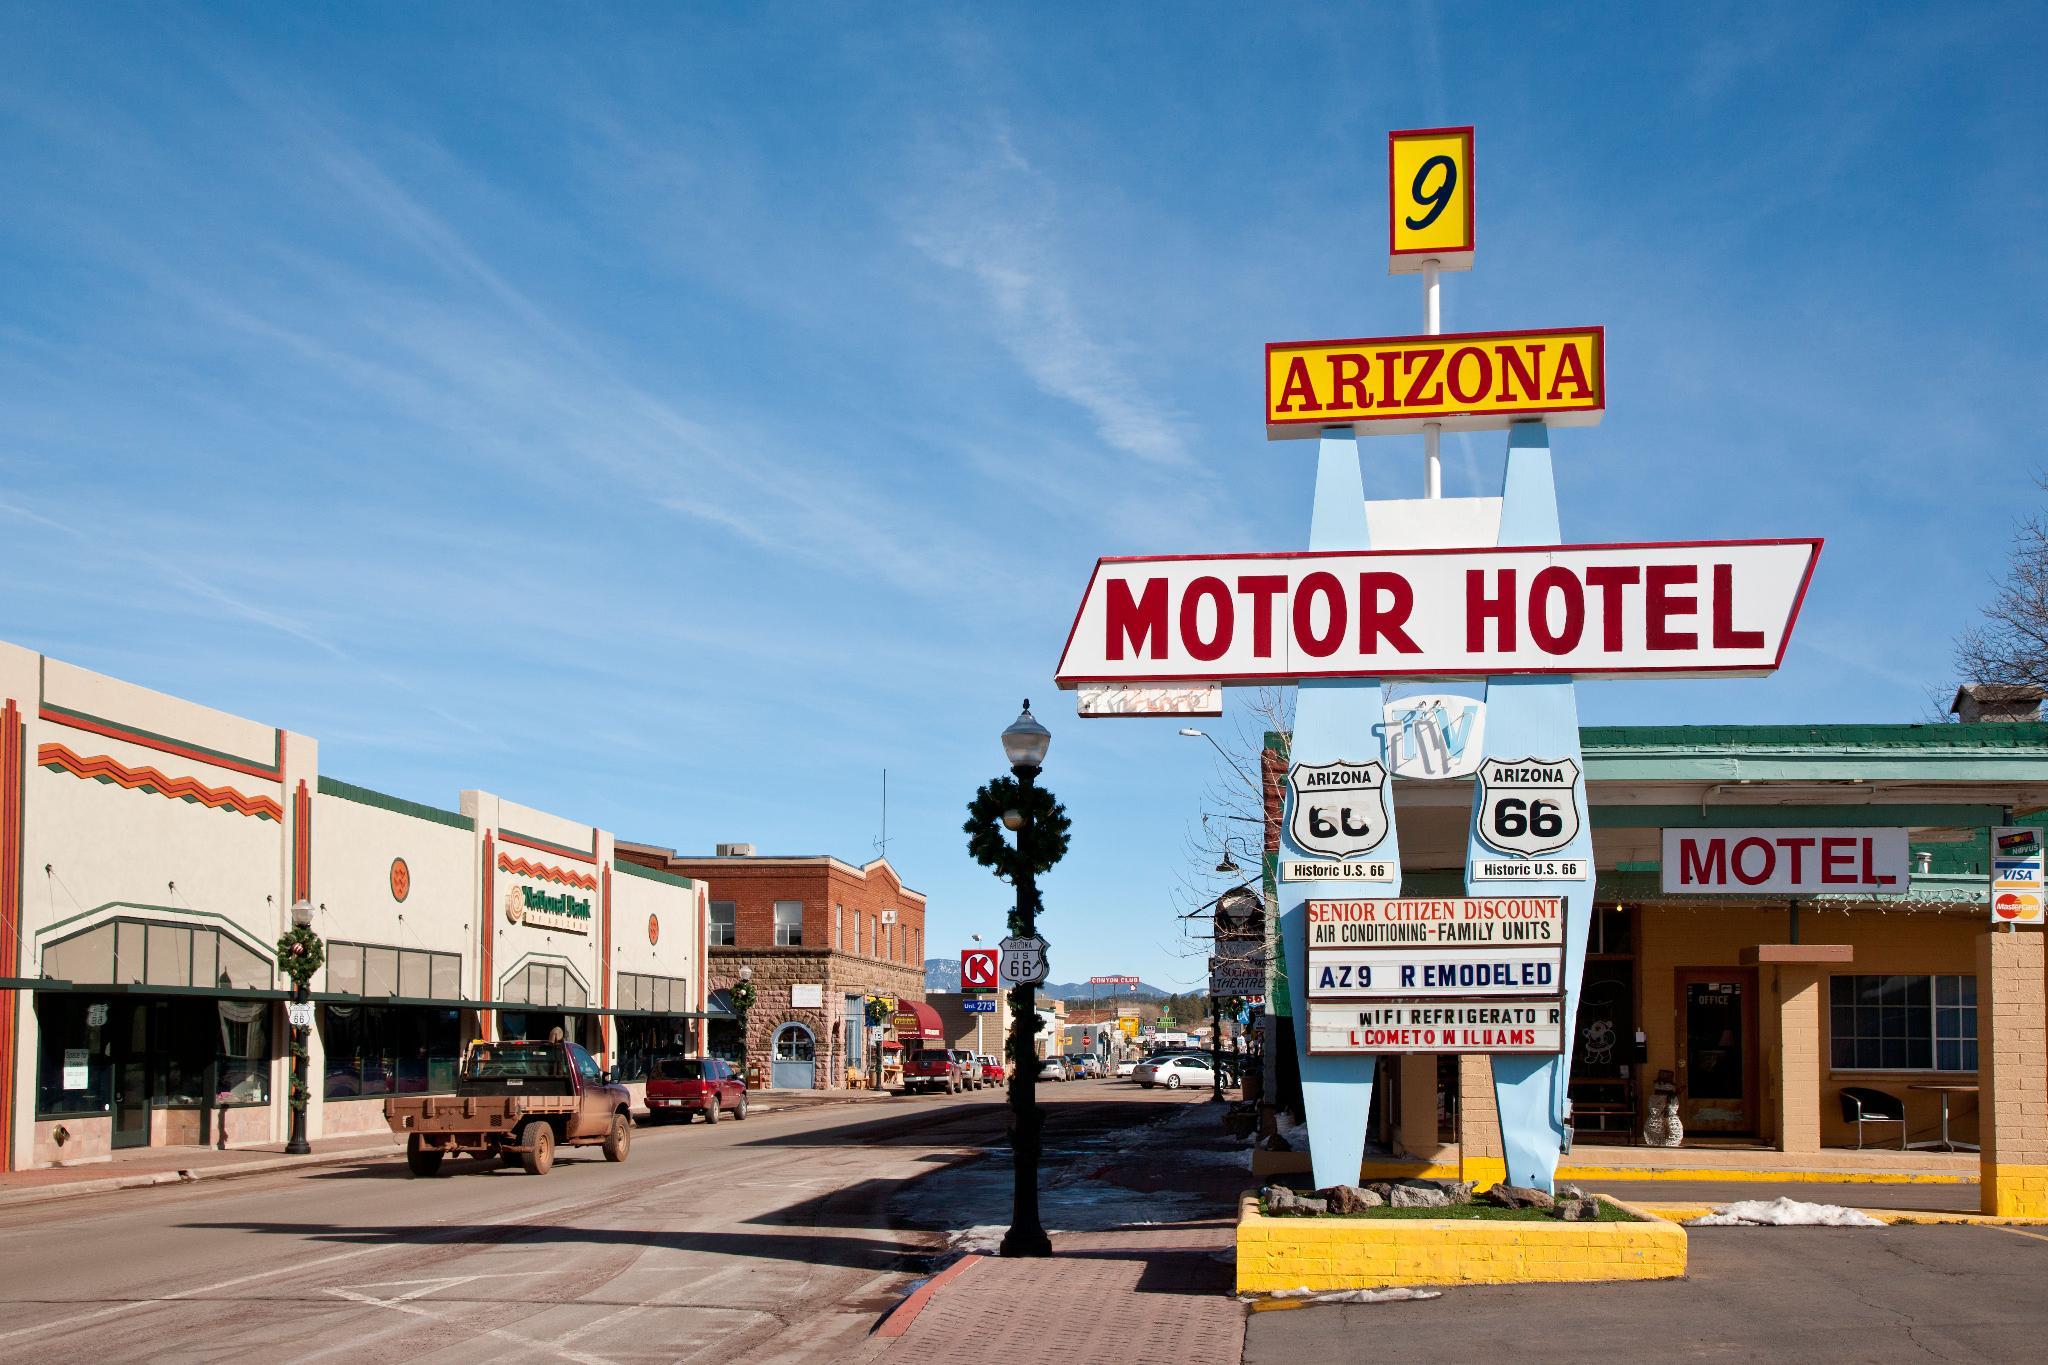 Arizona 9 Motor Hotel - 威廉姆斯